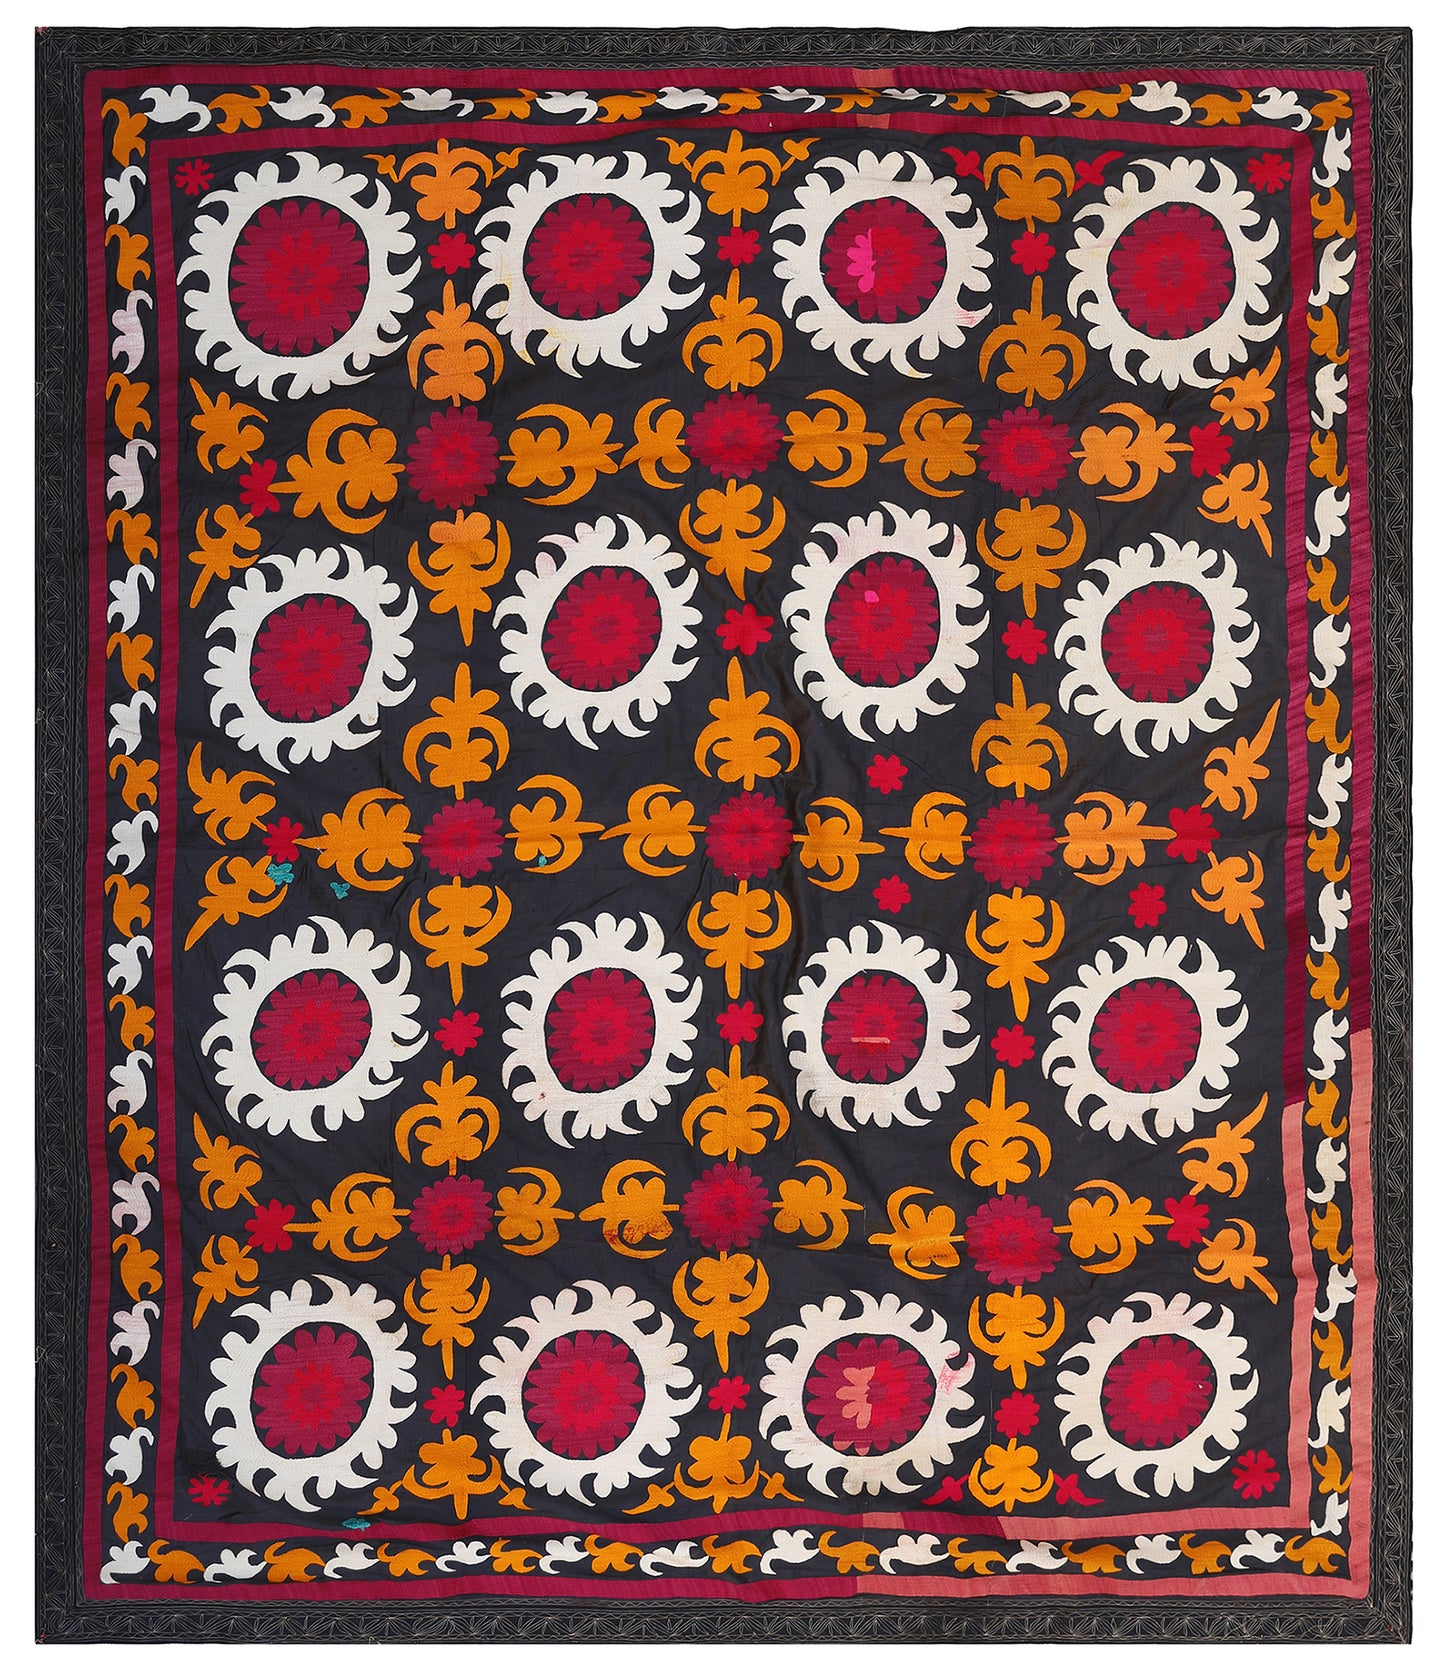 7'x9' Uzbek Suzani Embroidry Textile